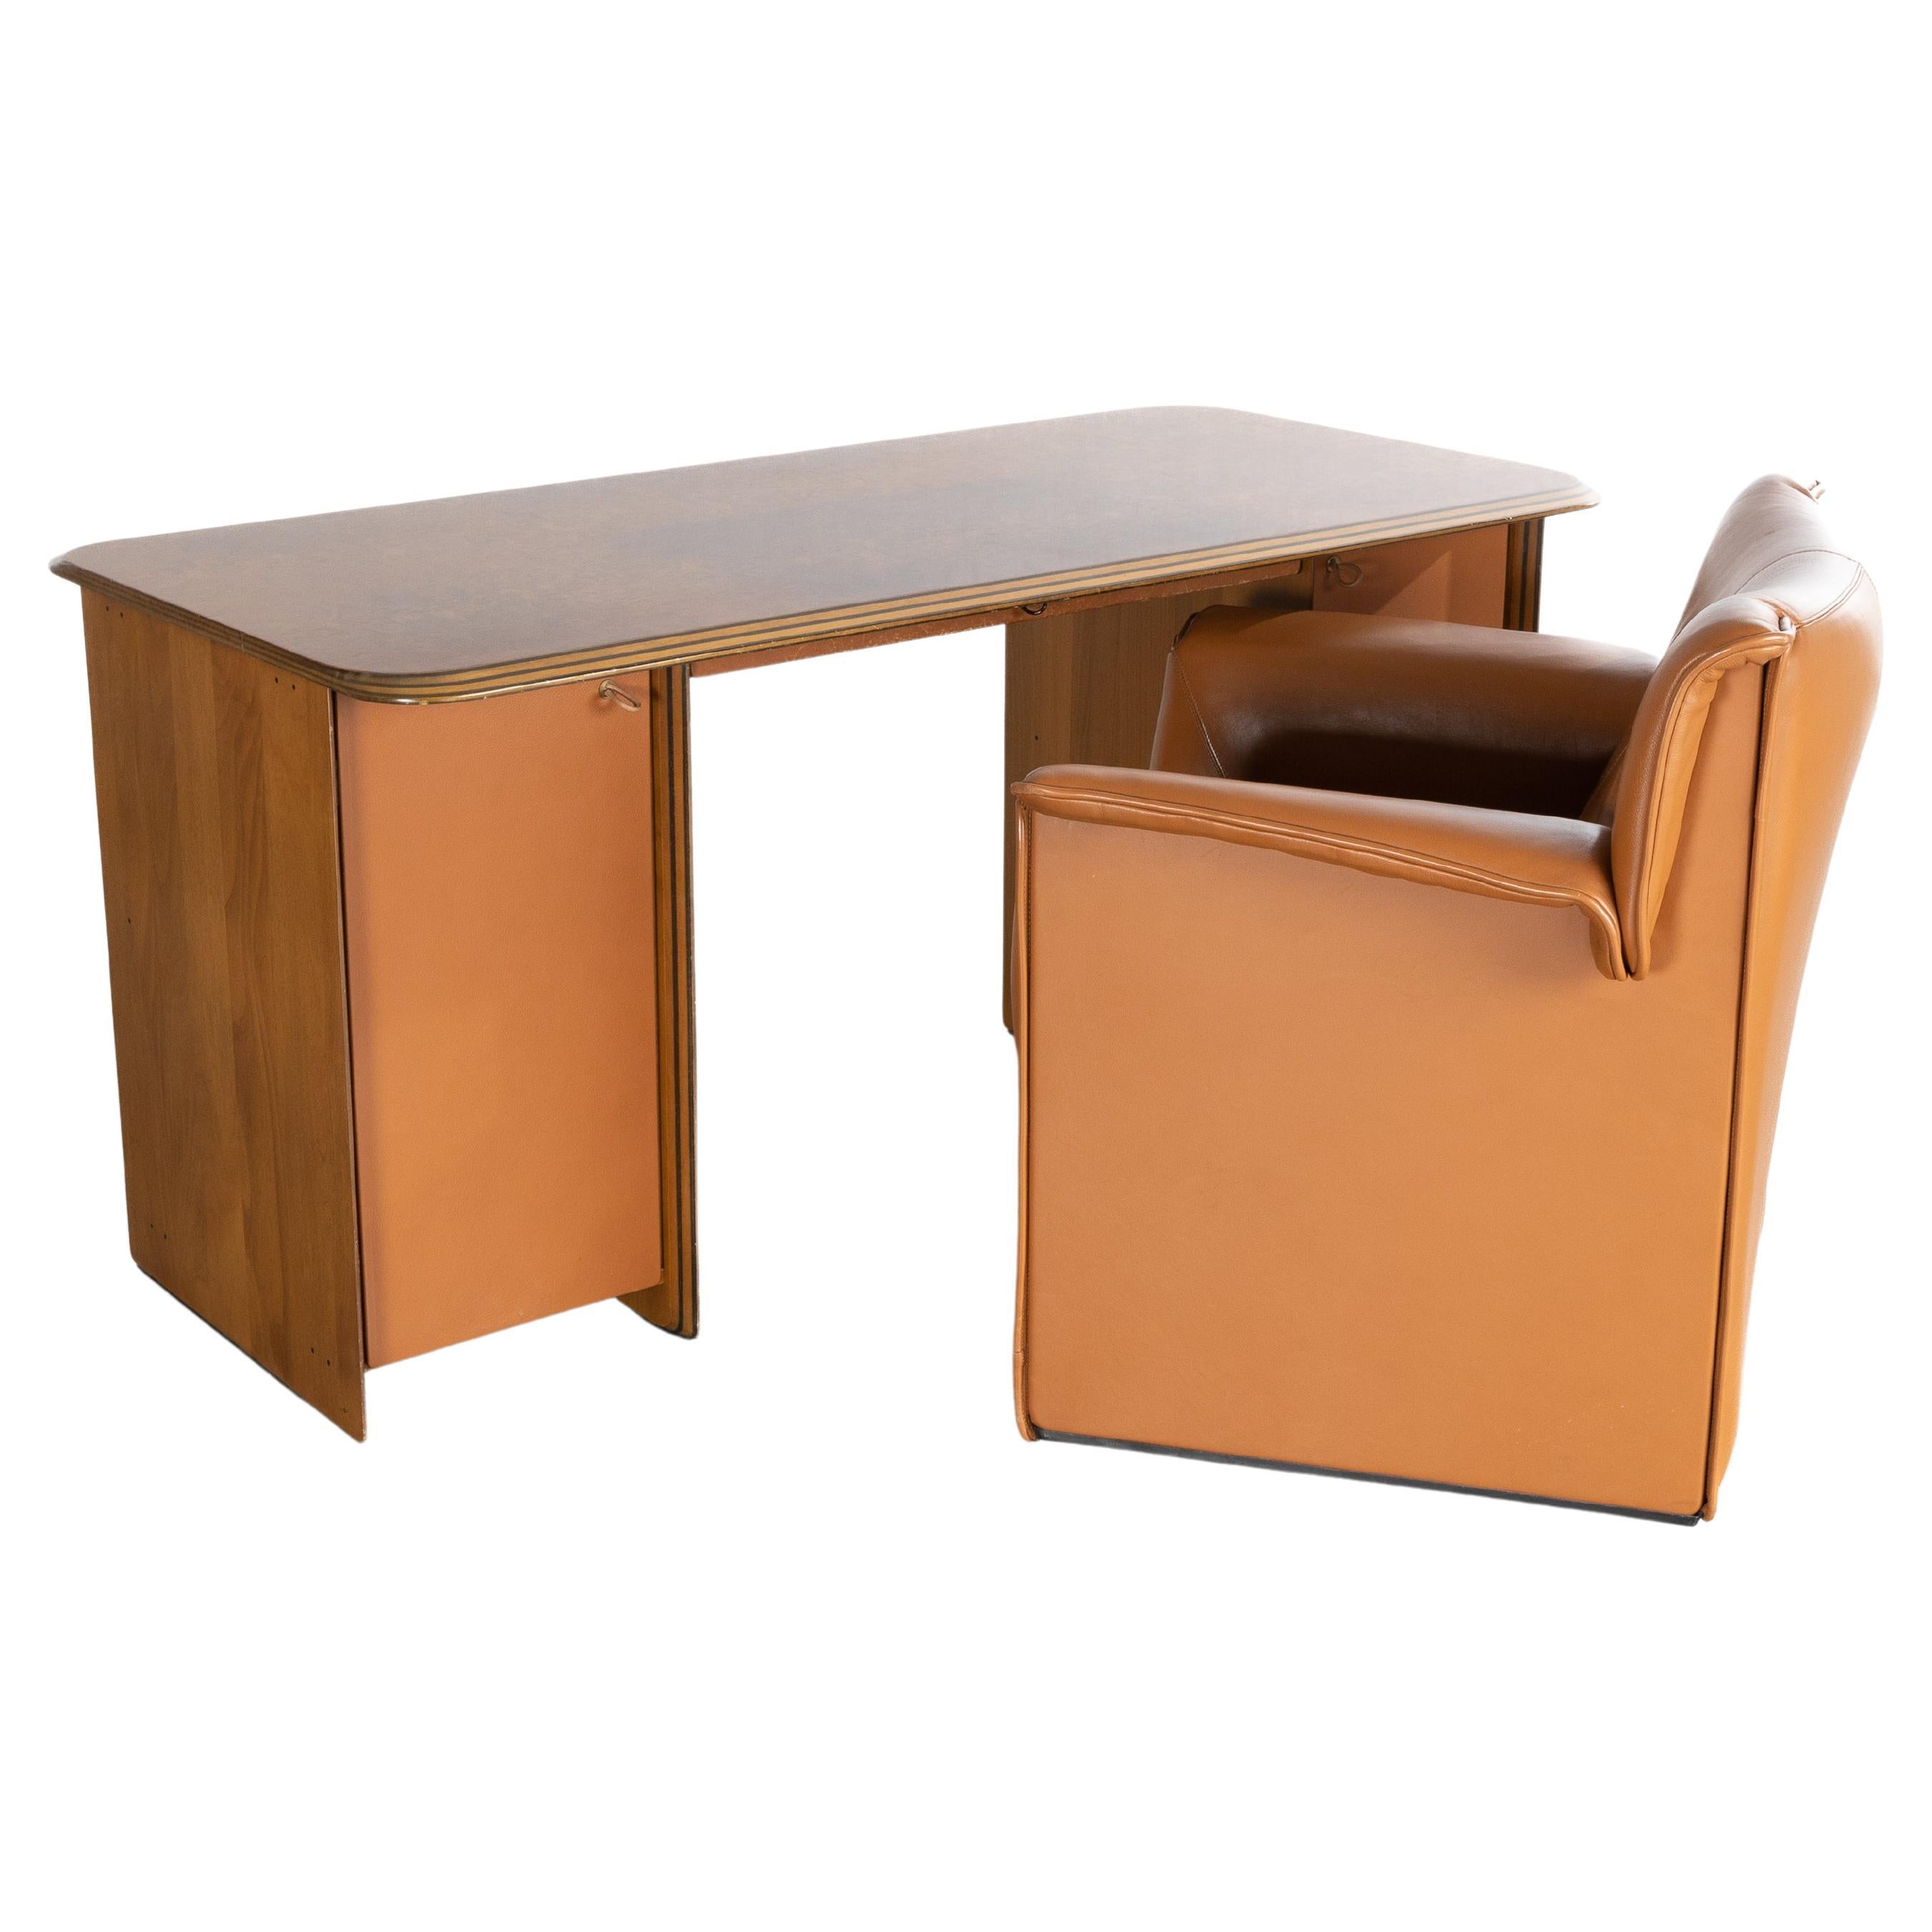 Artona by Afra & Tobia Scarpa – Walnut veneer laminate desk and chair For Sale